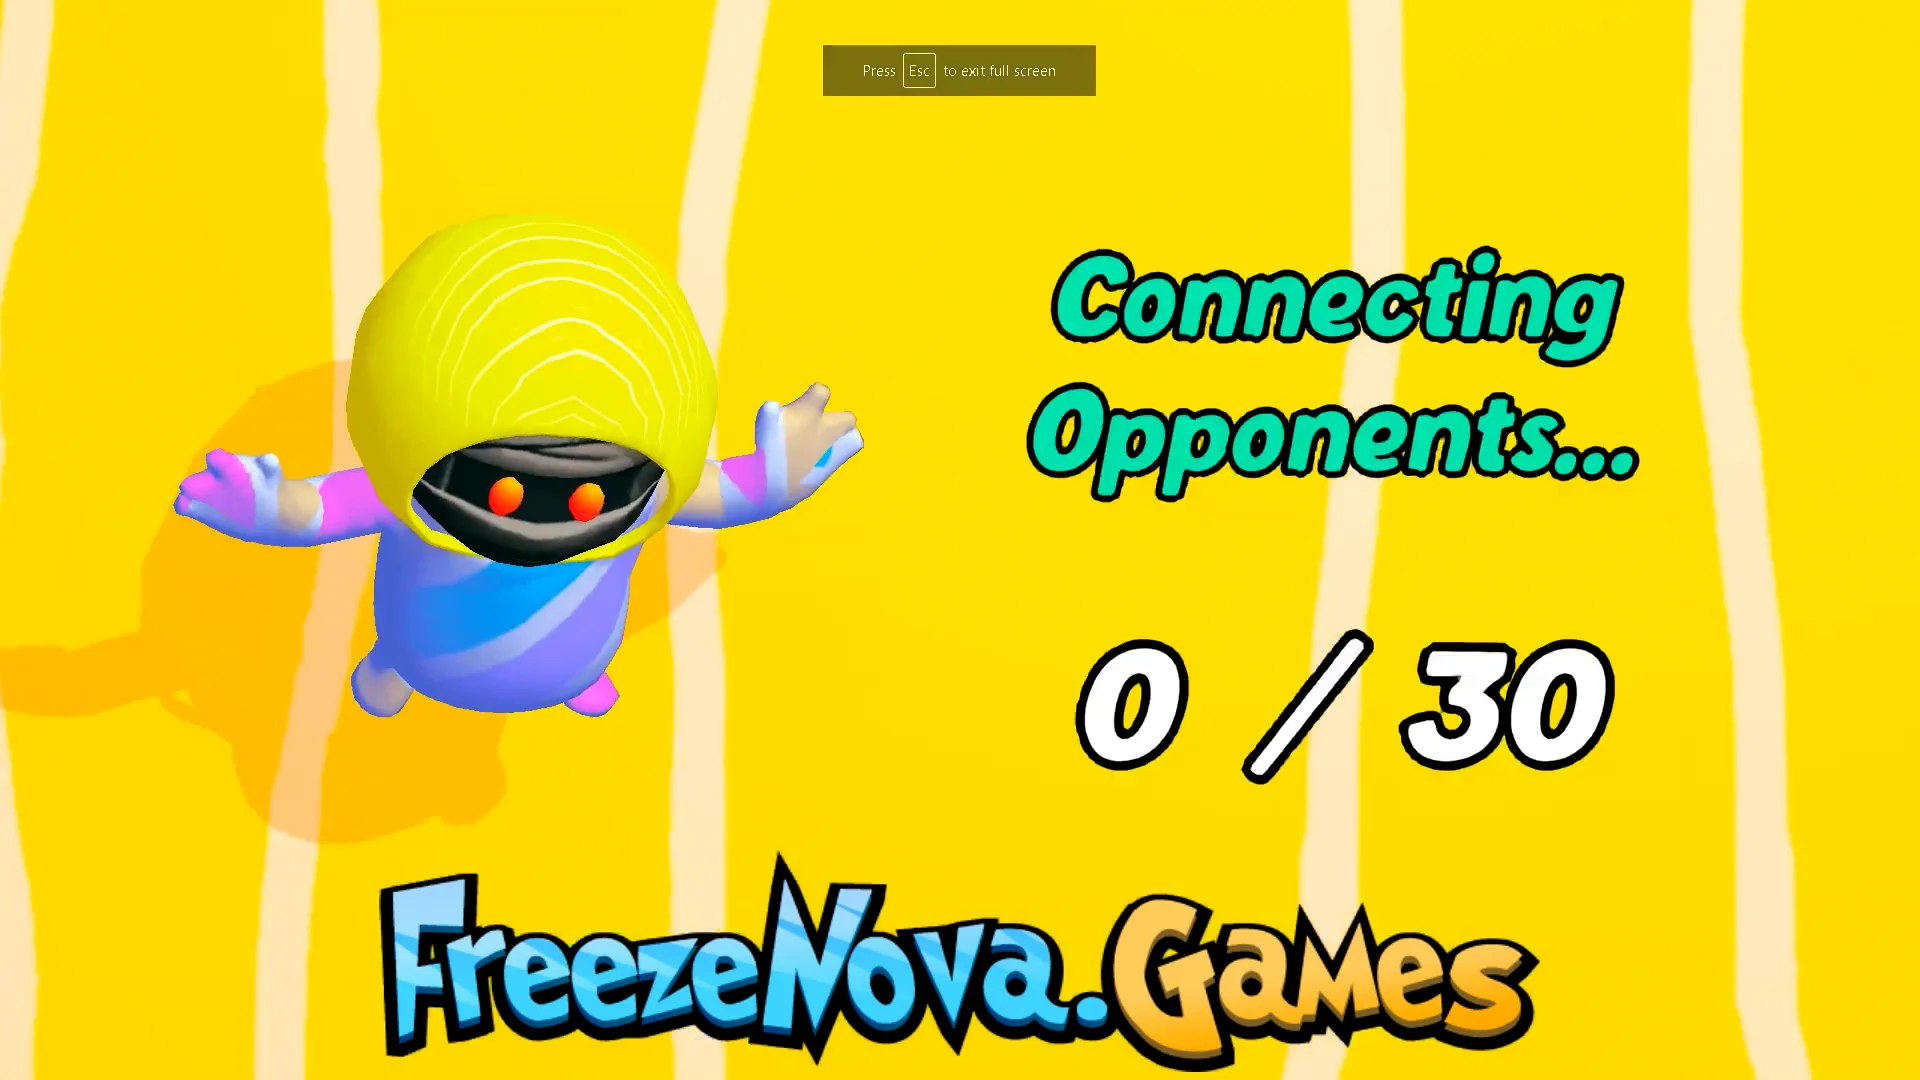 Car Games Unblocked - FreezeNova.Games on Vimeo